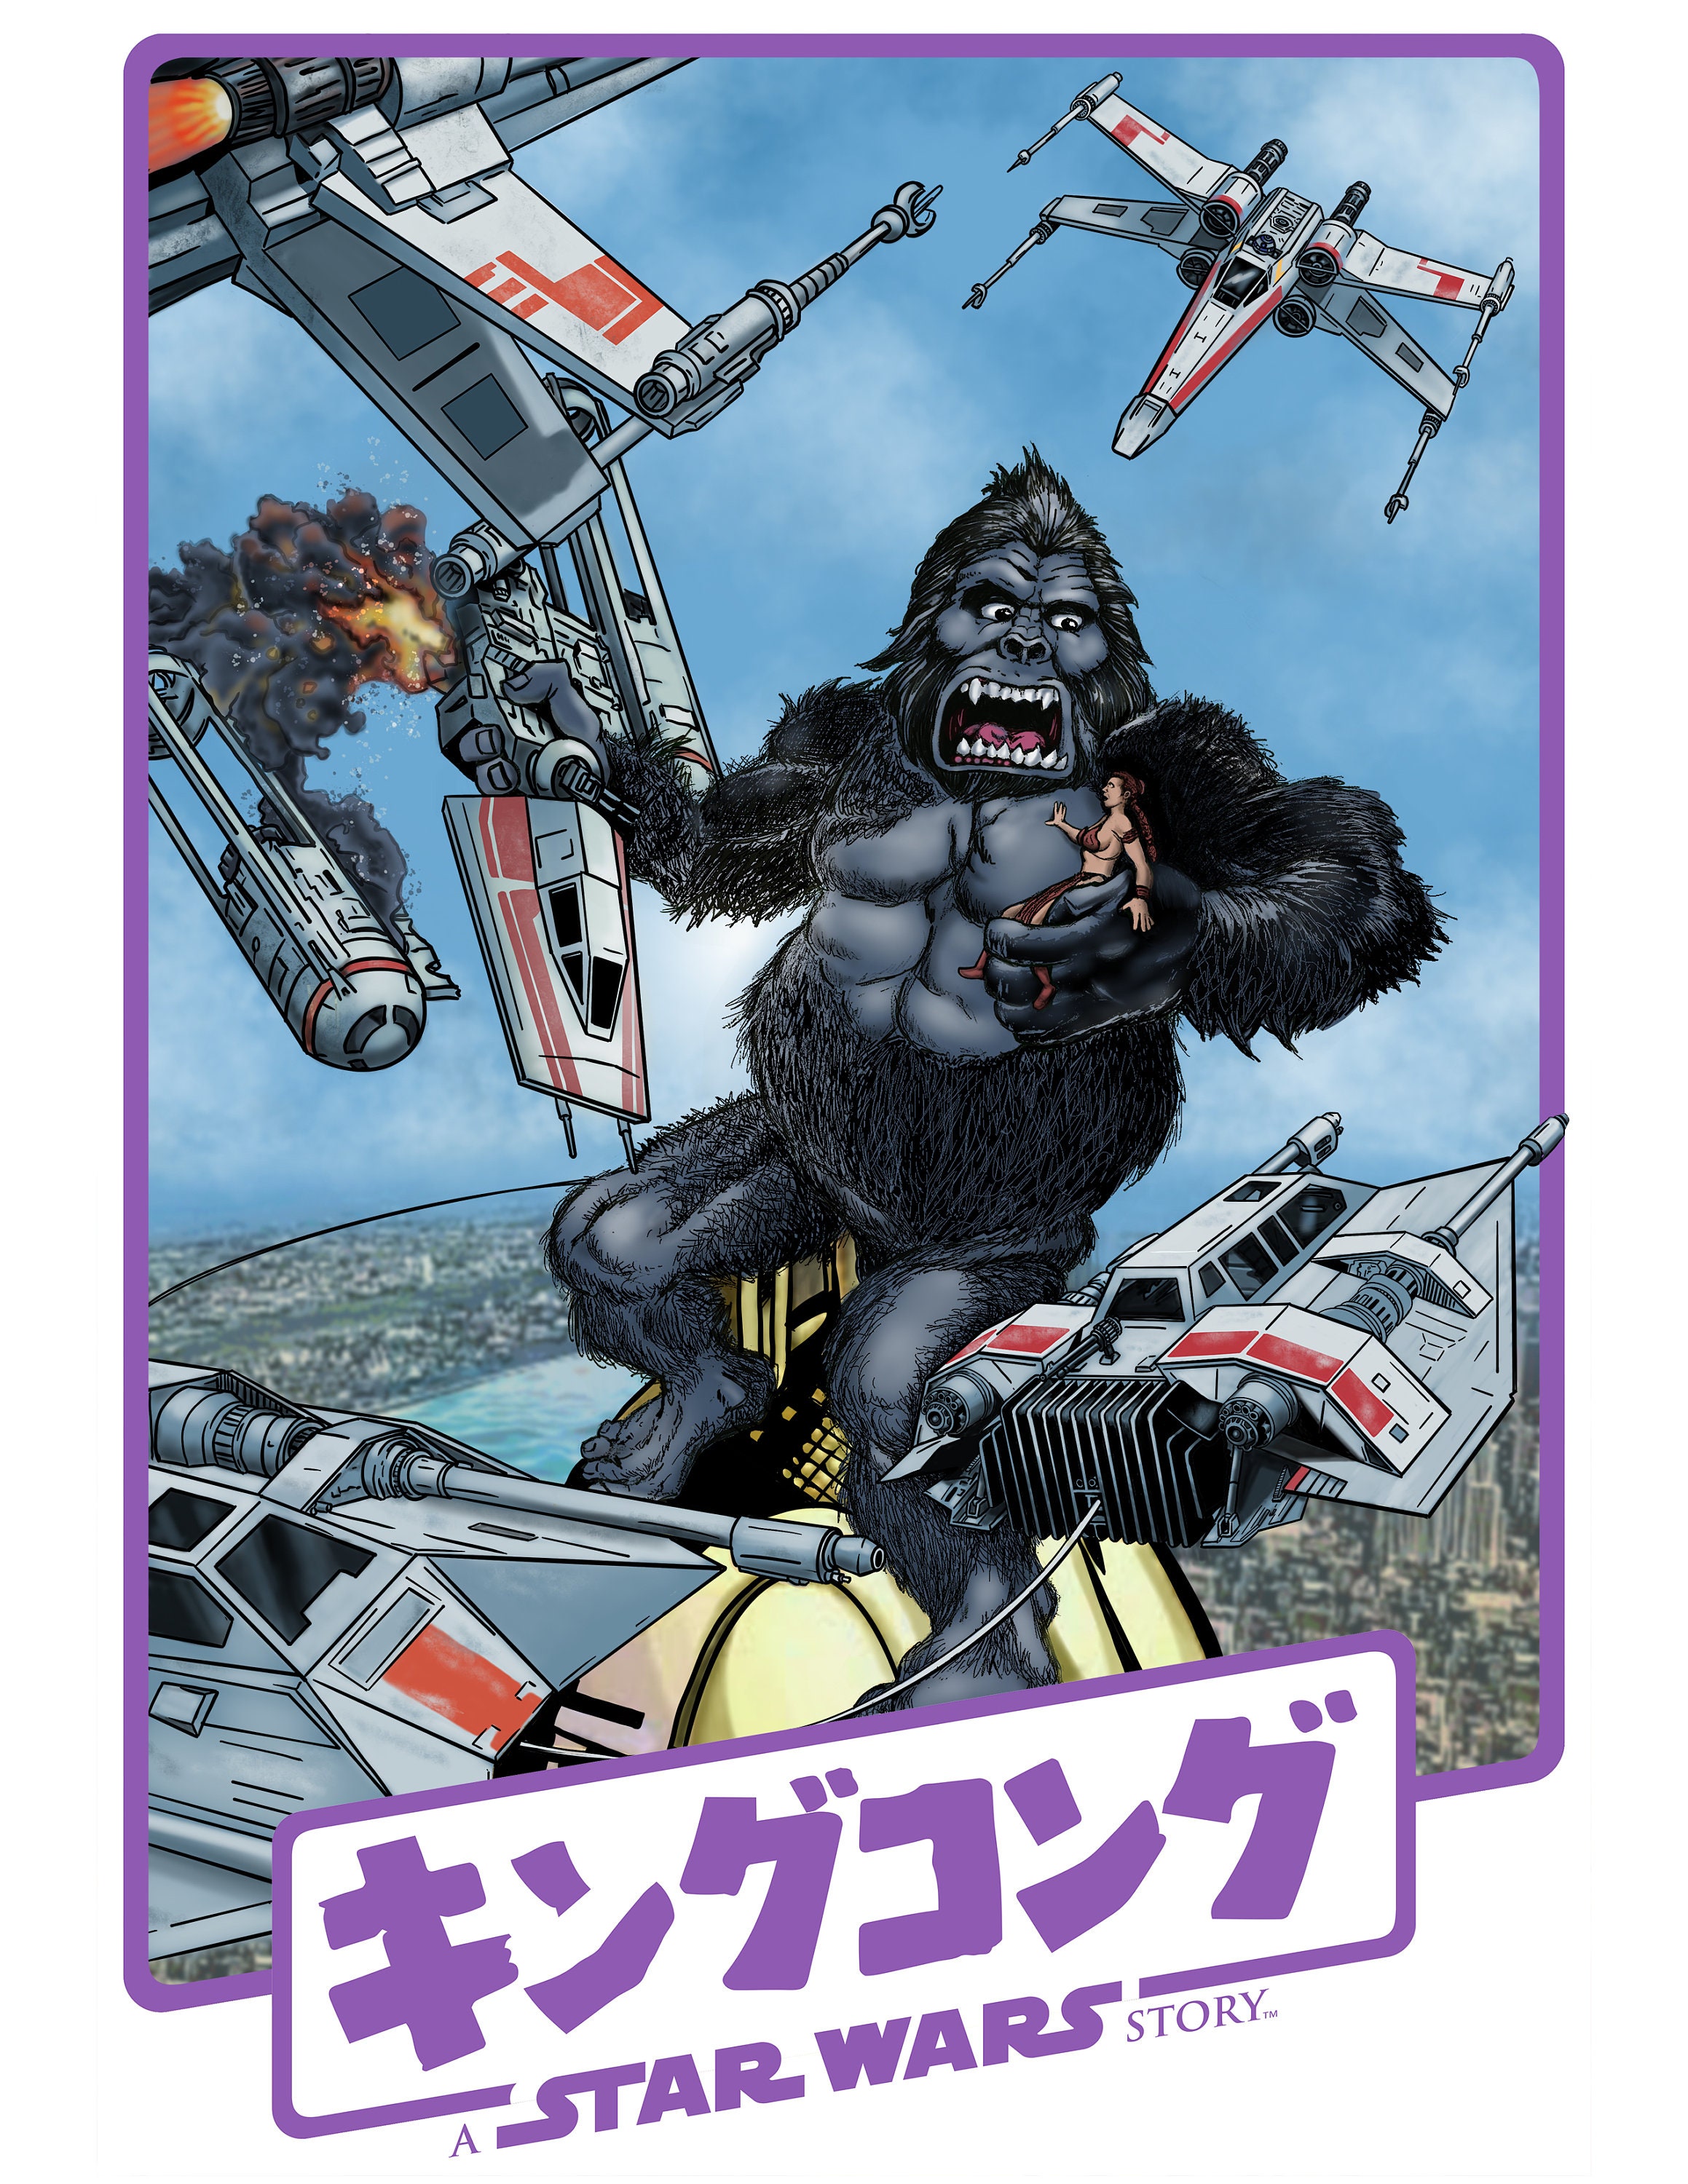 Keer terug Chronisch Aarzelen King Kong Versus Star Wars Rebellion Movie Mix up Poster. the - Etsy